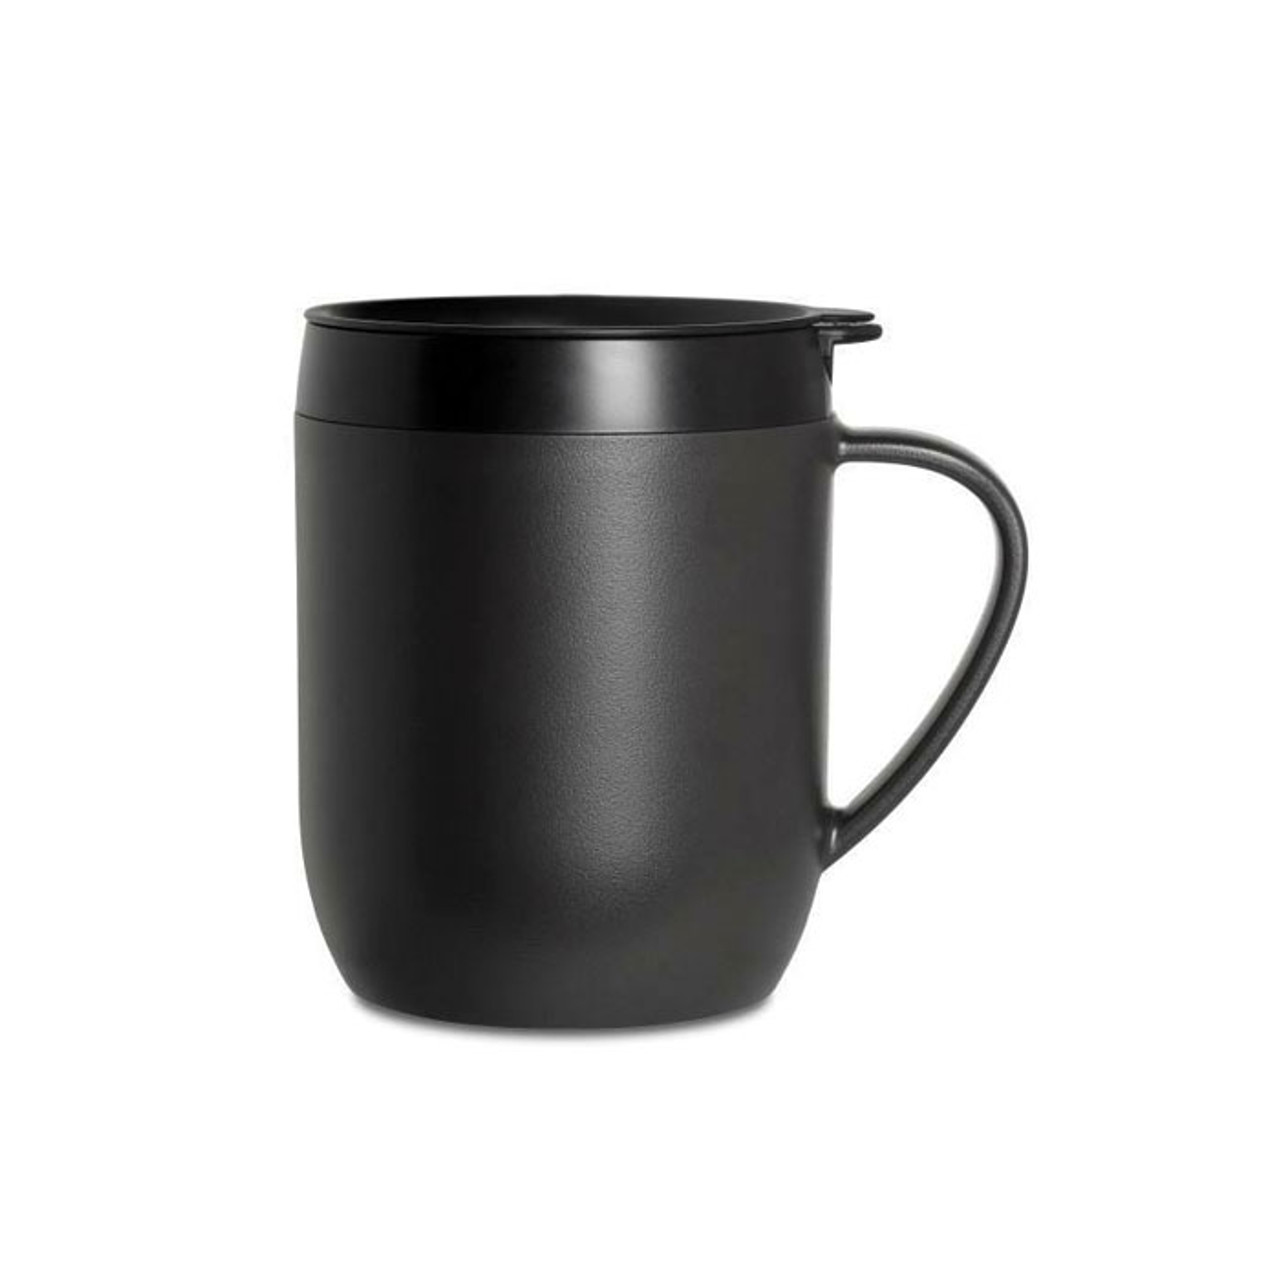 Zyliss Grey Hot Mug Coffee Cafetiere Flask